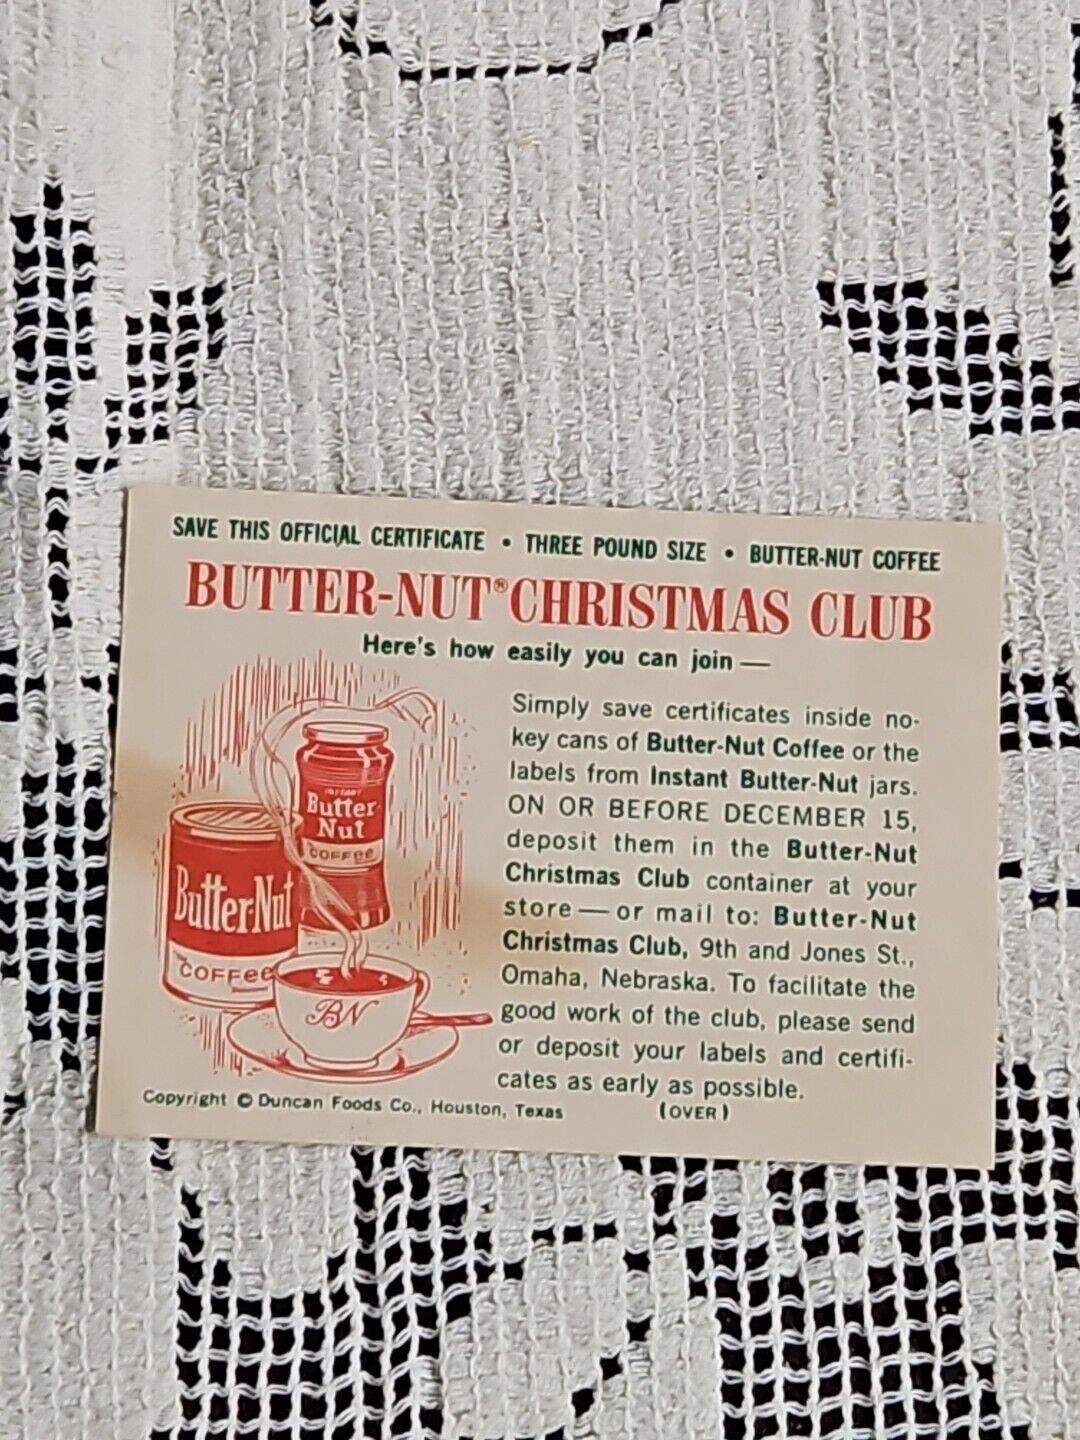 Butter-Nut Christmas Club Official Certificate Omaha Nebraska